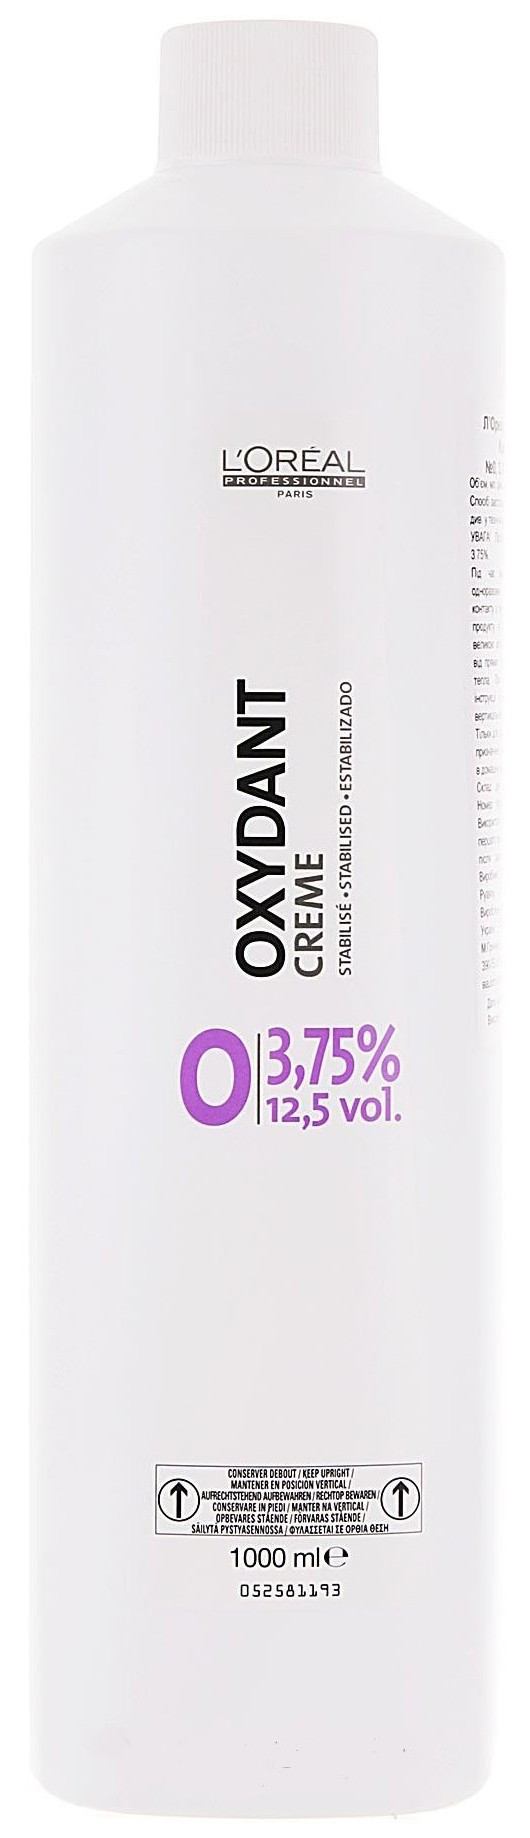 Проявитель L'Oreal Professionnel Oxydant Creame 3,75% 1000 мл l oreal professionnel обогащенный оксидант 3% 10 vol 1000 мл